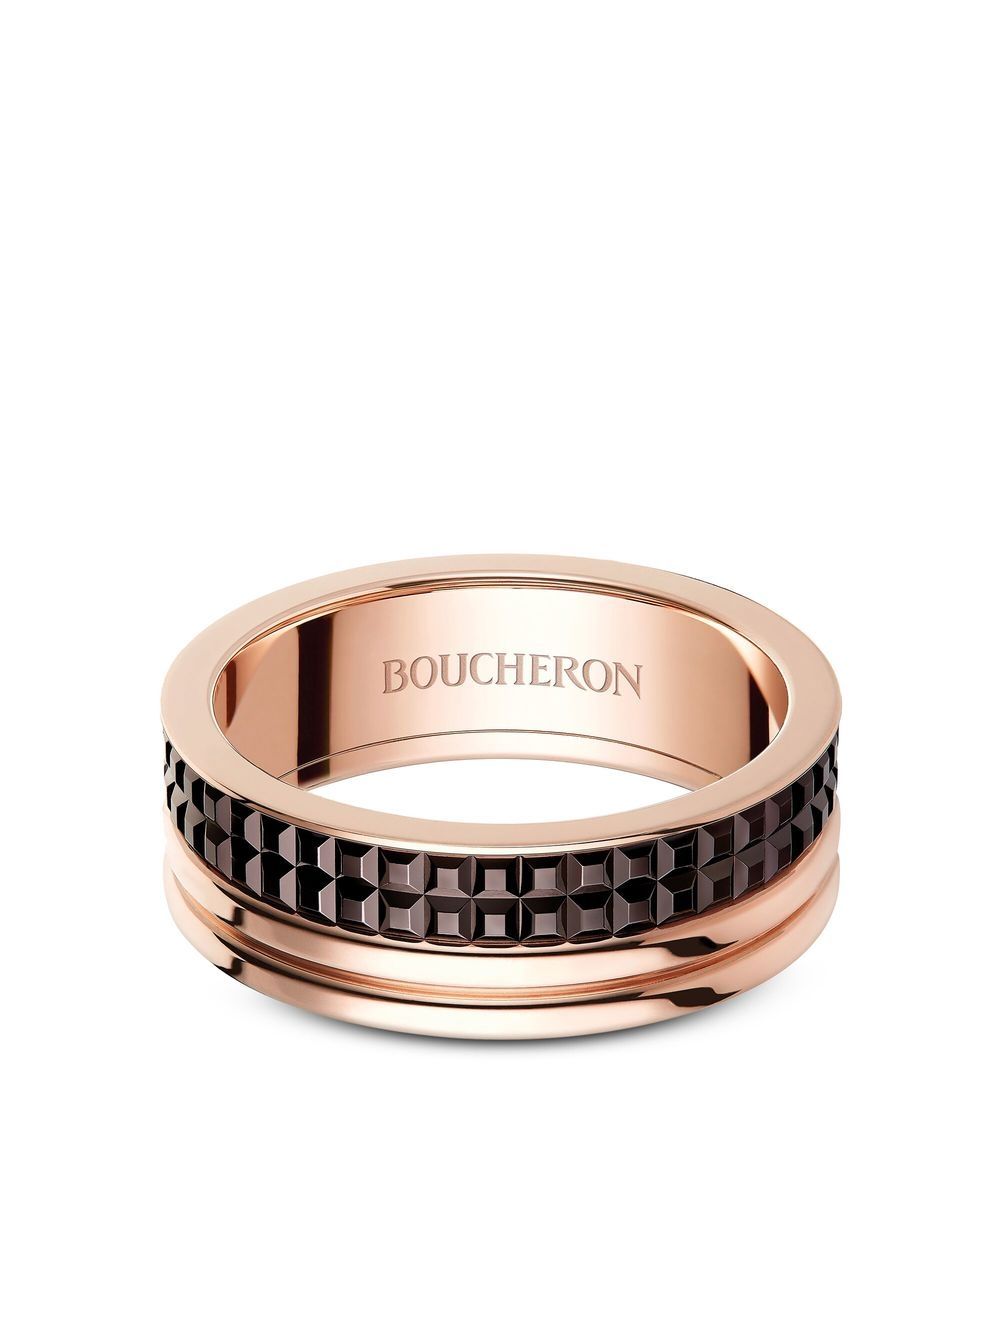 Boucheron 18kt rose gold Quatre Classique wedding band - Pink von Boucheron